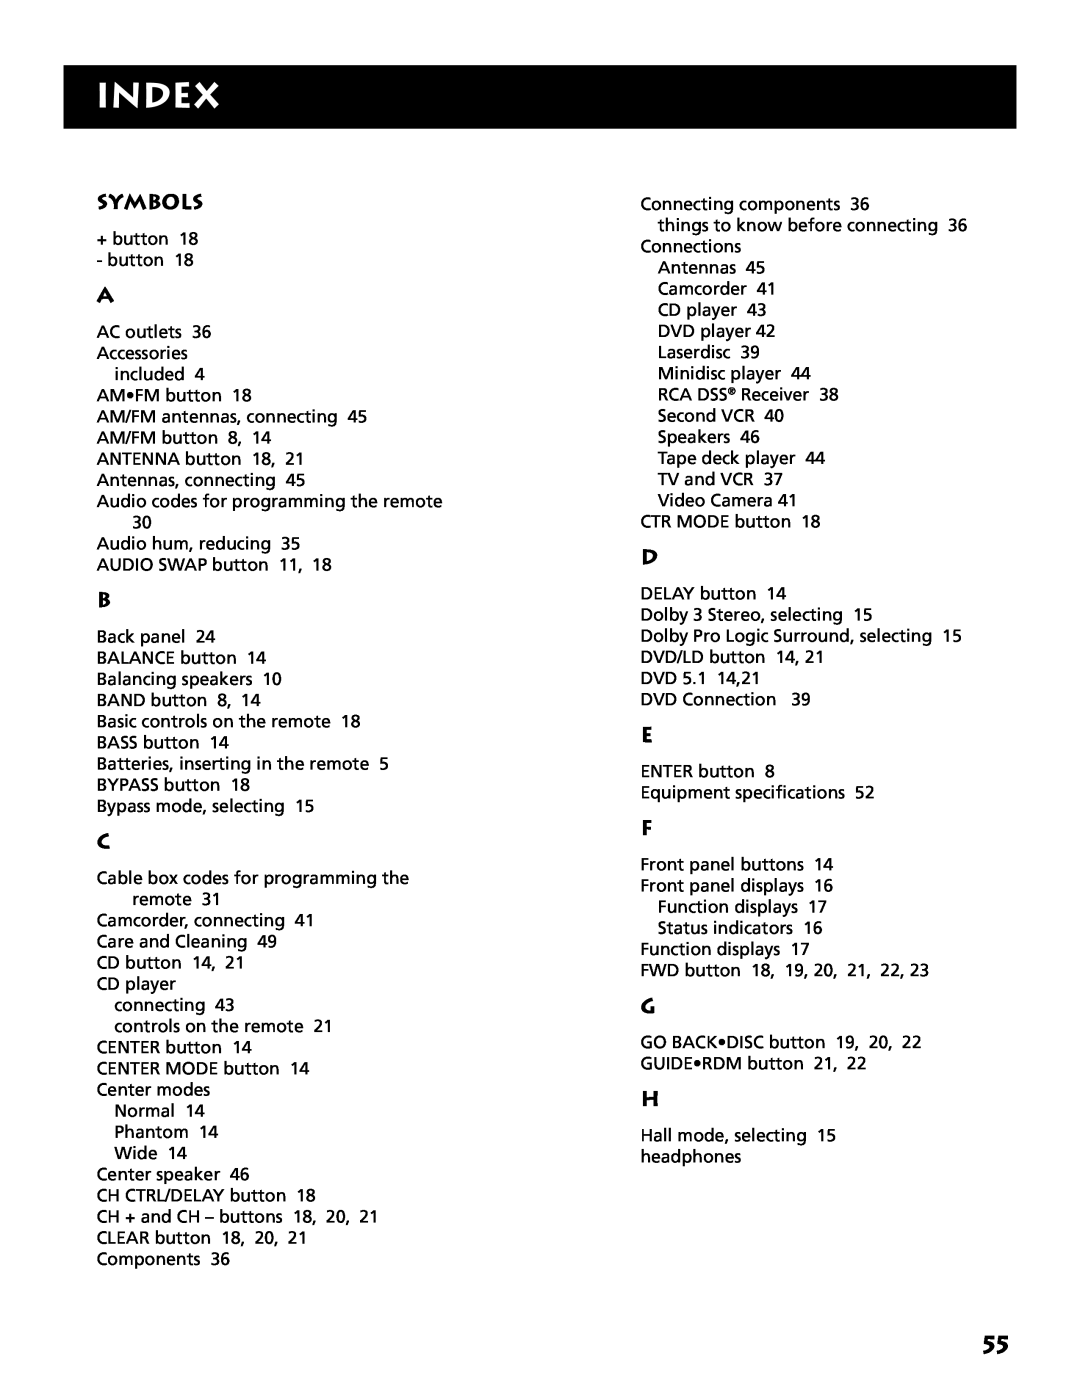 Electrohome RV-3798 manual Index, Symbols 